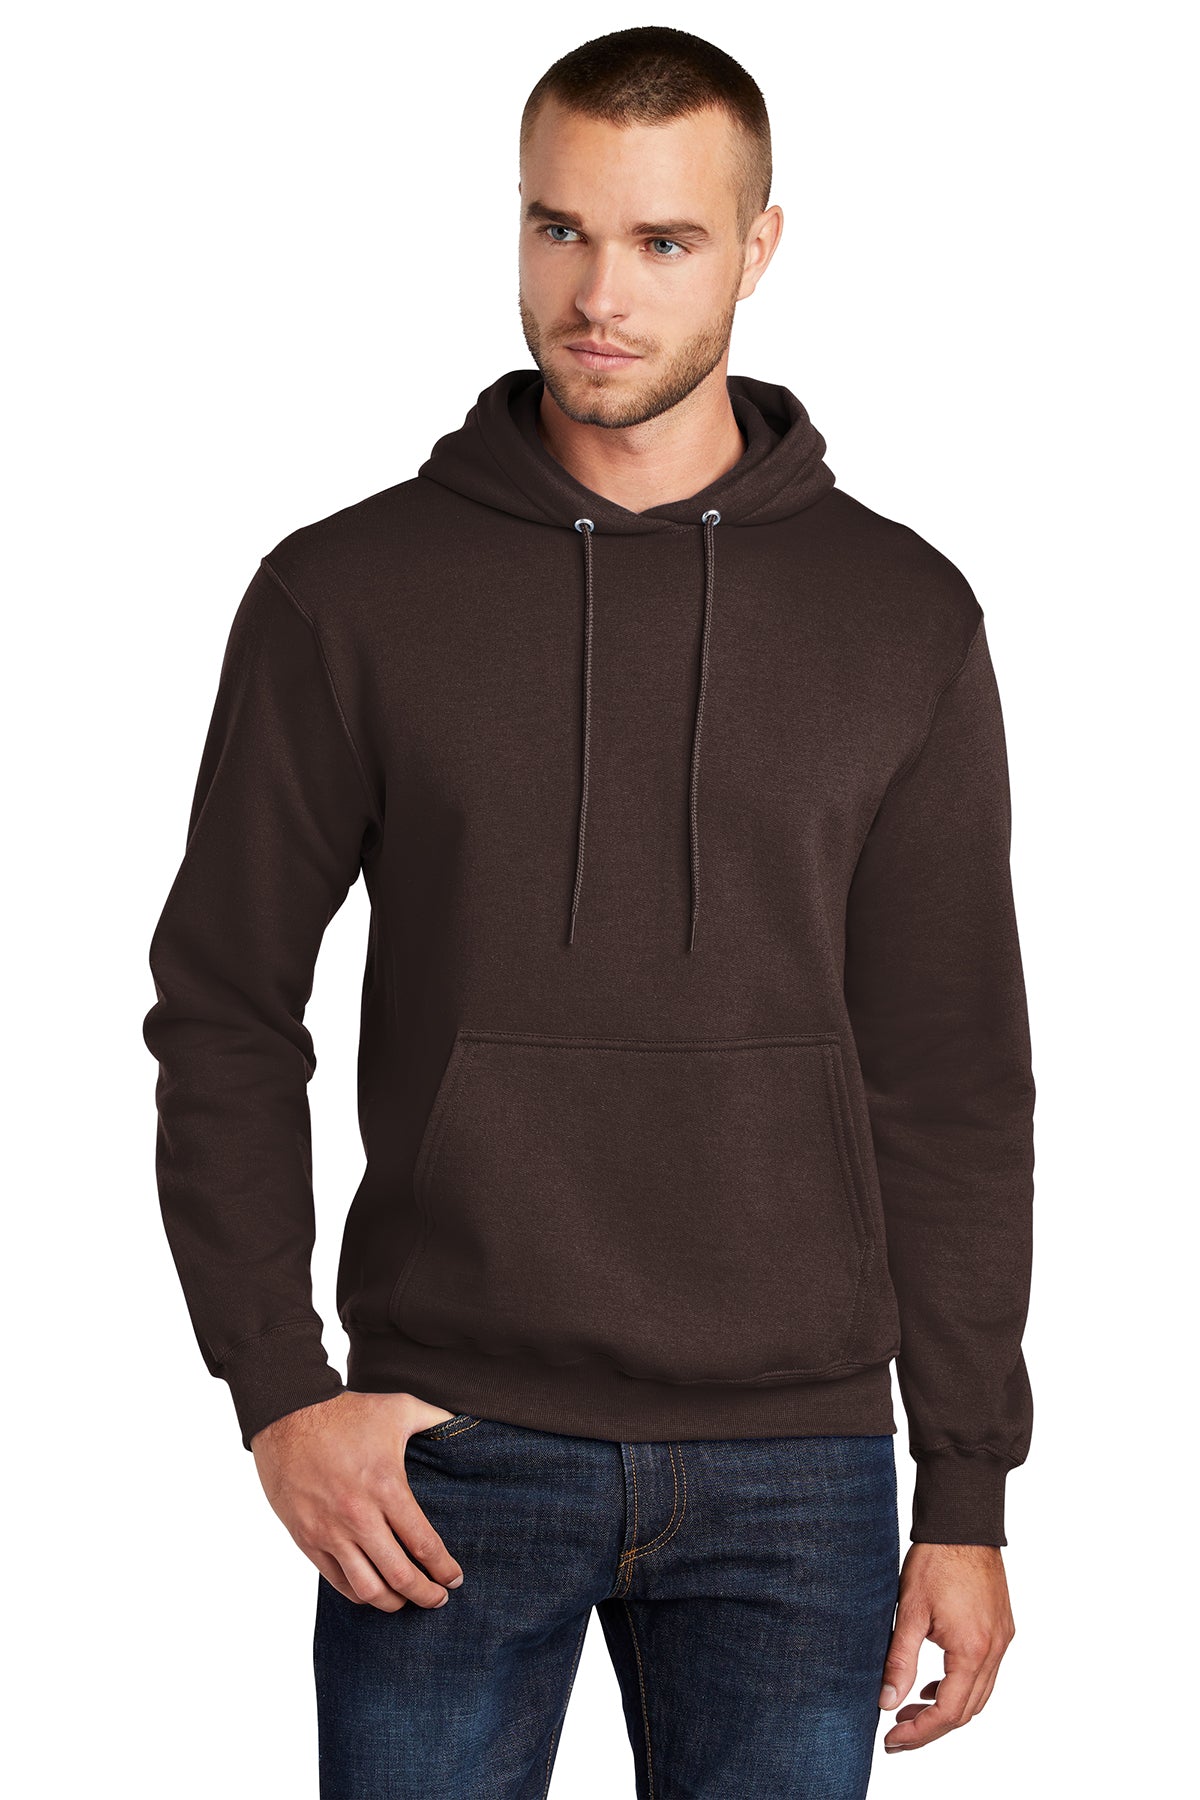 Port & Company PC78H Mens Core Fleece Hooded Sweatshirt Hoodie Chocolate Brown Front